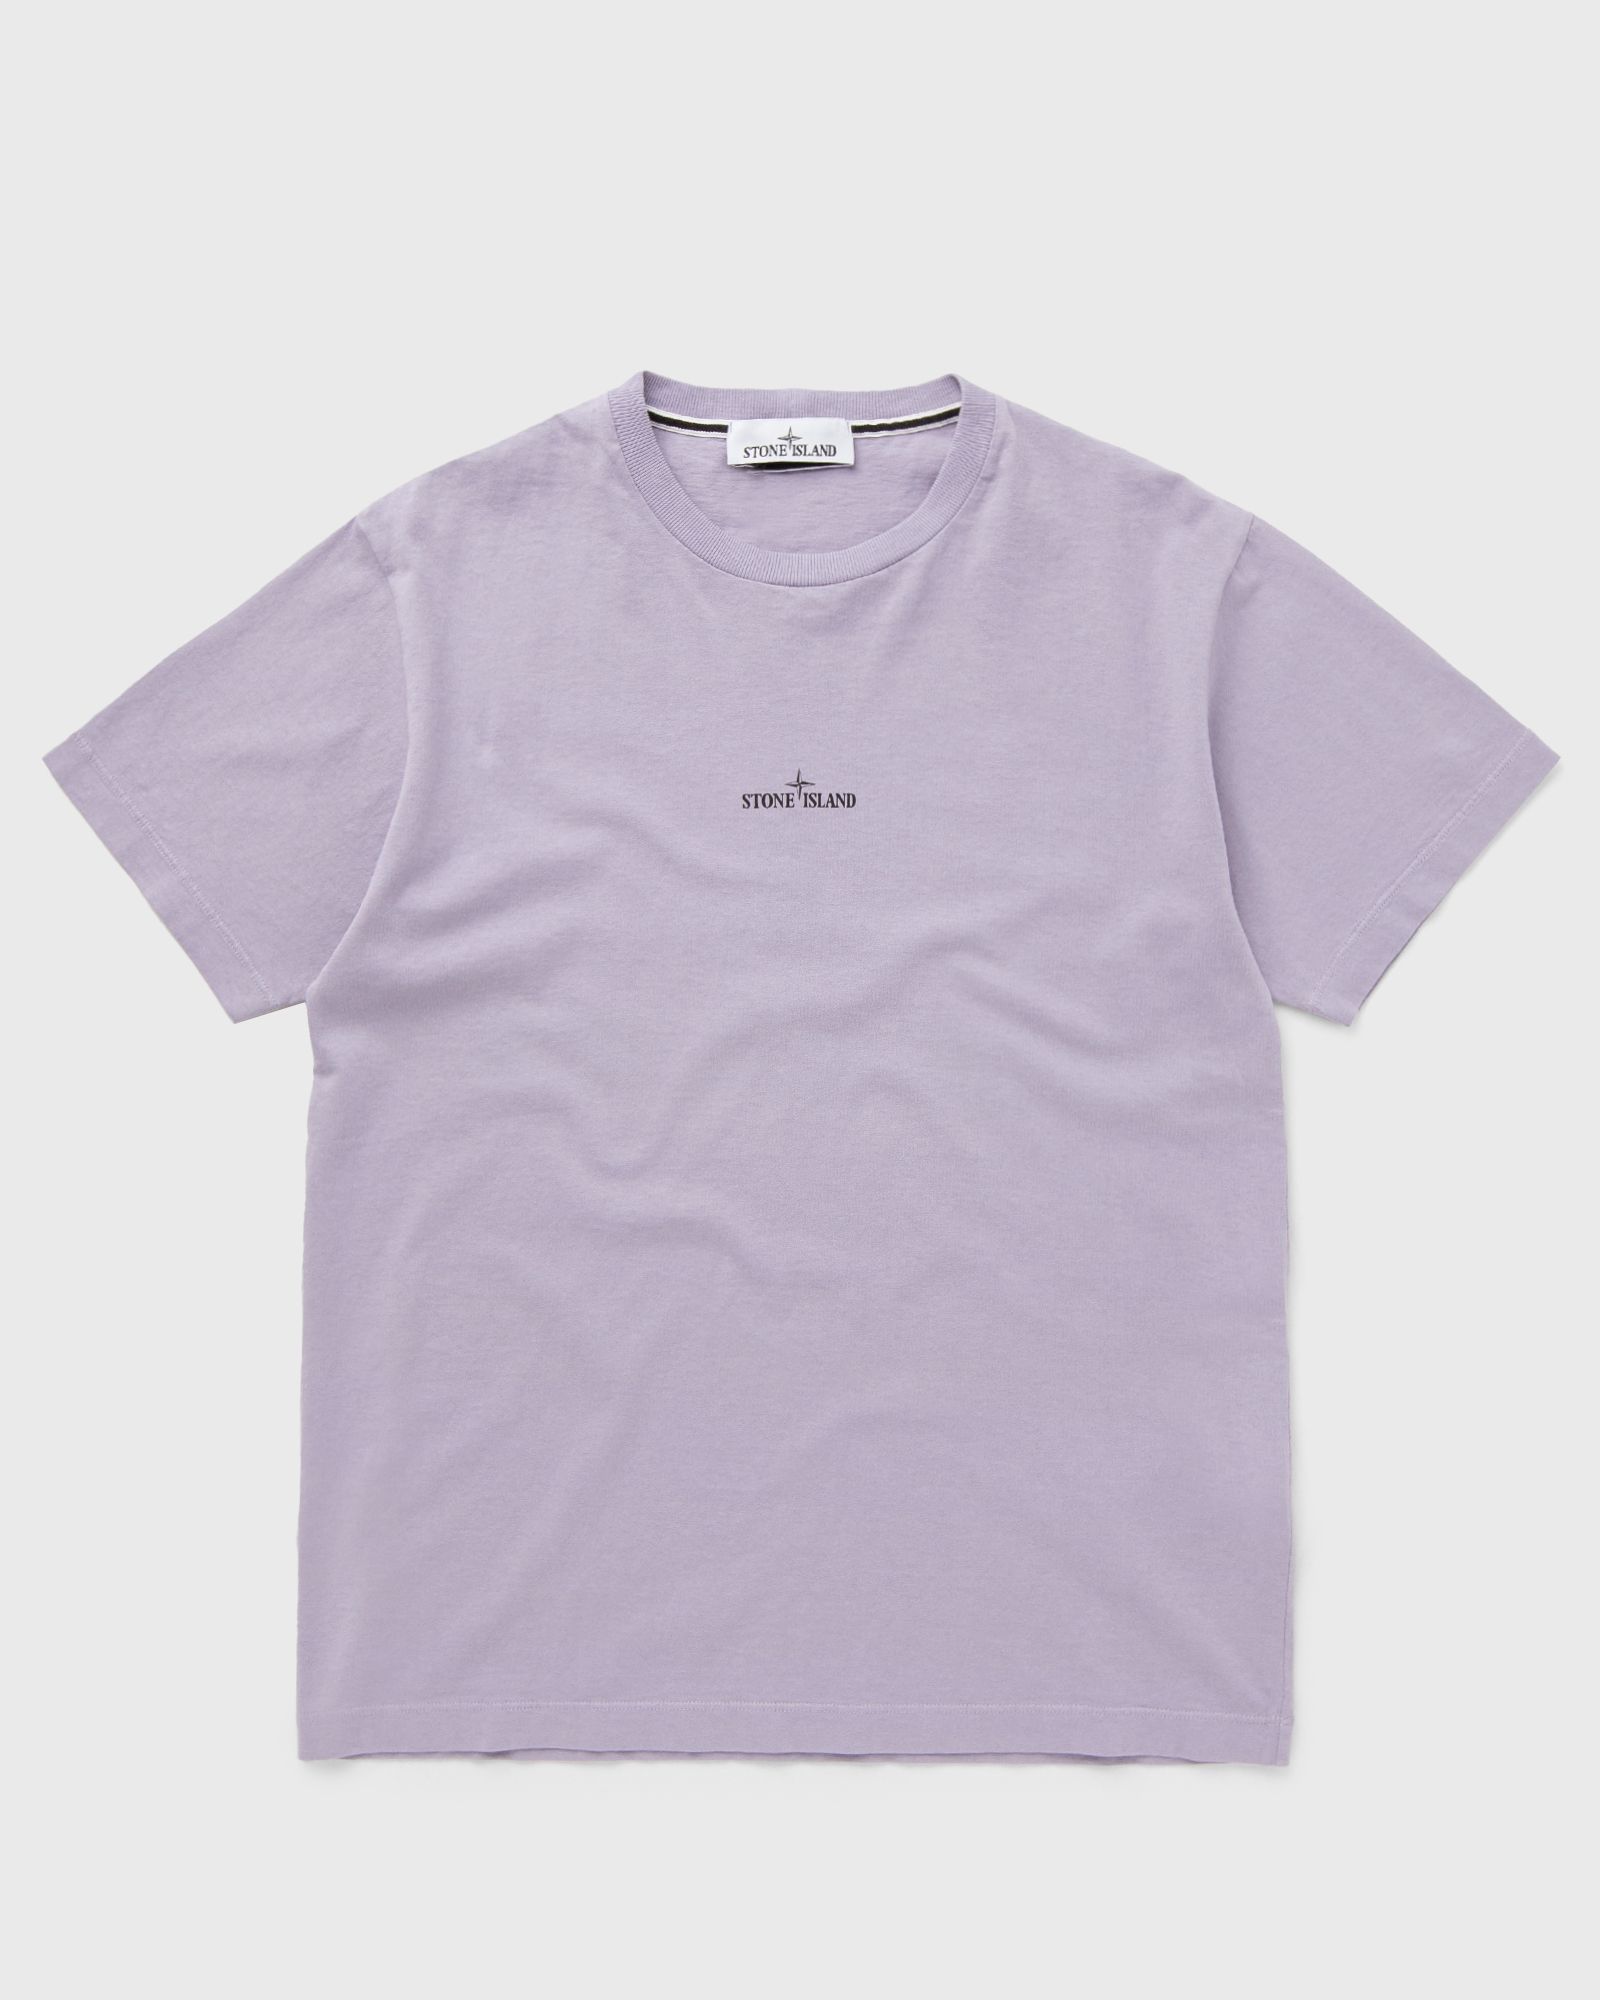 Stone Island - tee cotton jersey, 'stamp two' print, garment dyed men shortsleeves purple in größe:xxl